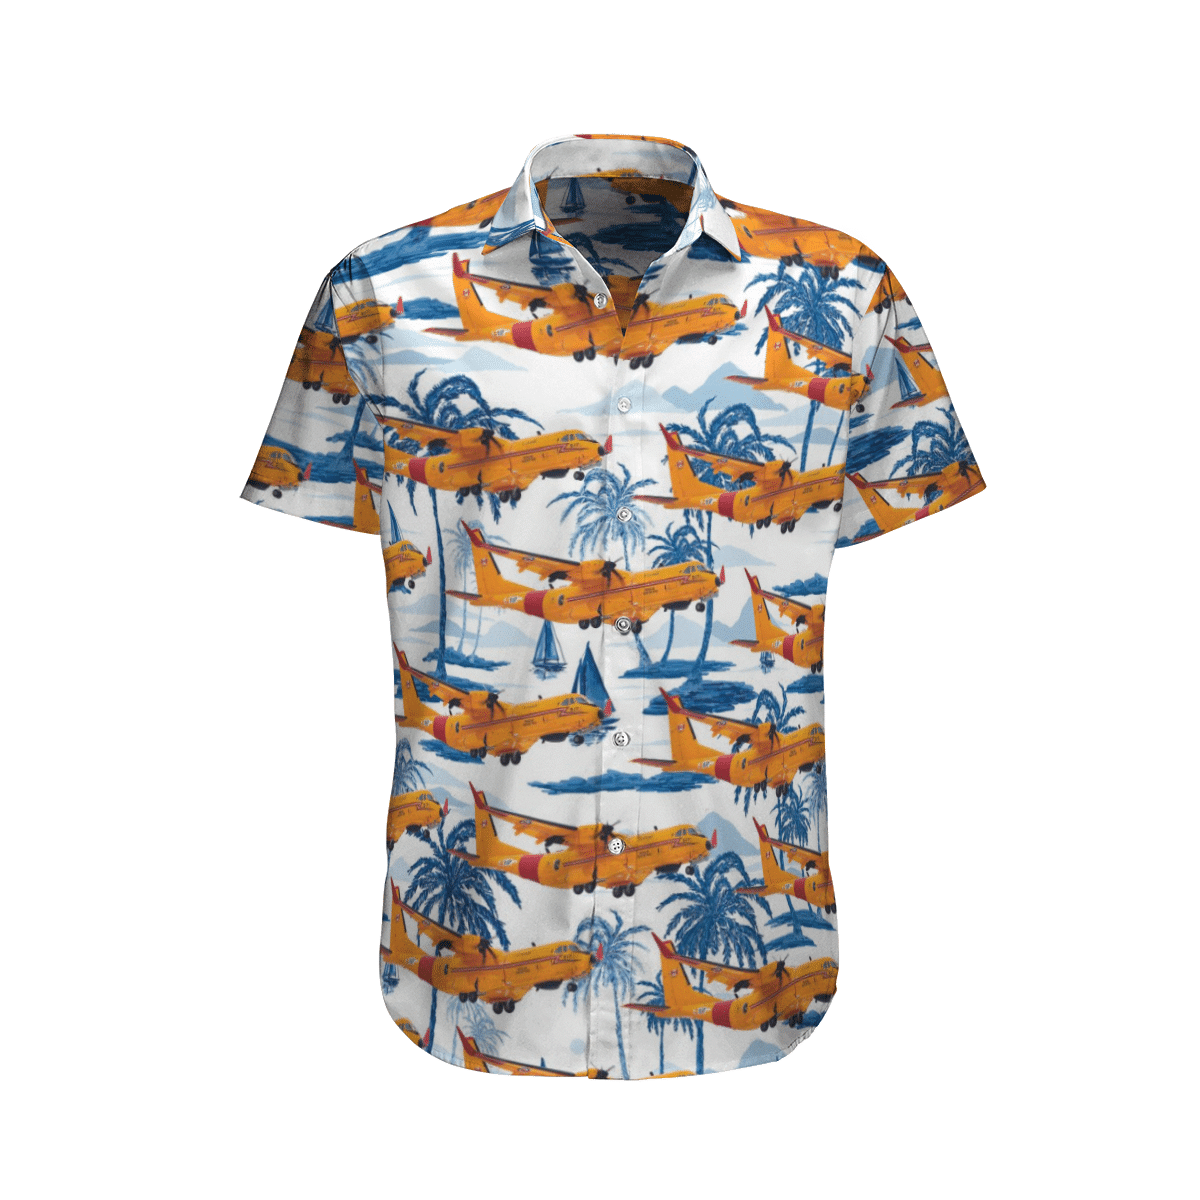 Get a new Hawaiian shirt to enjoy summer vacation 135